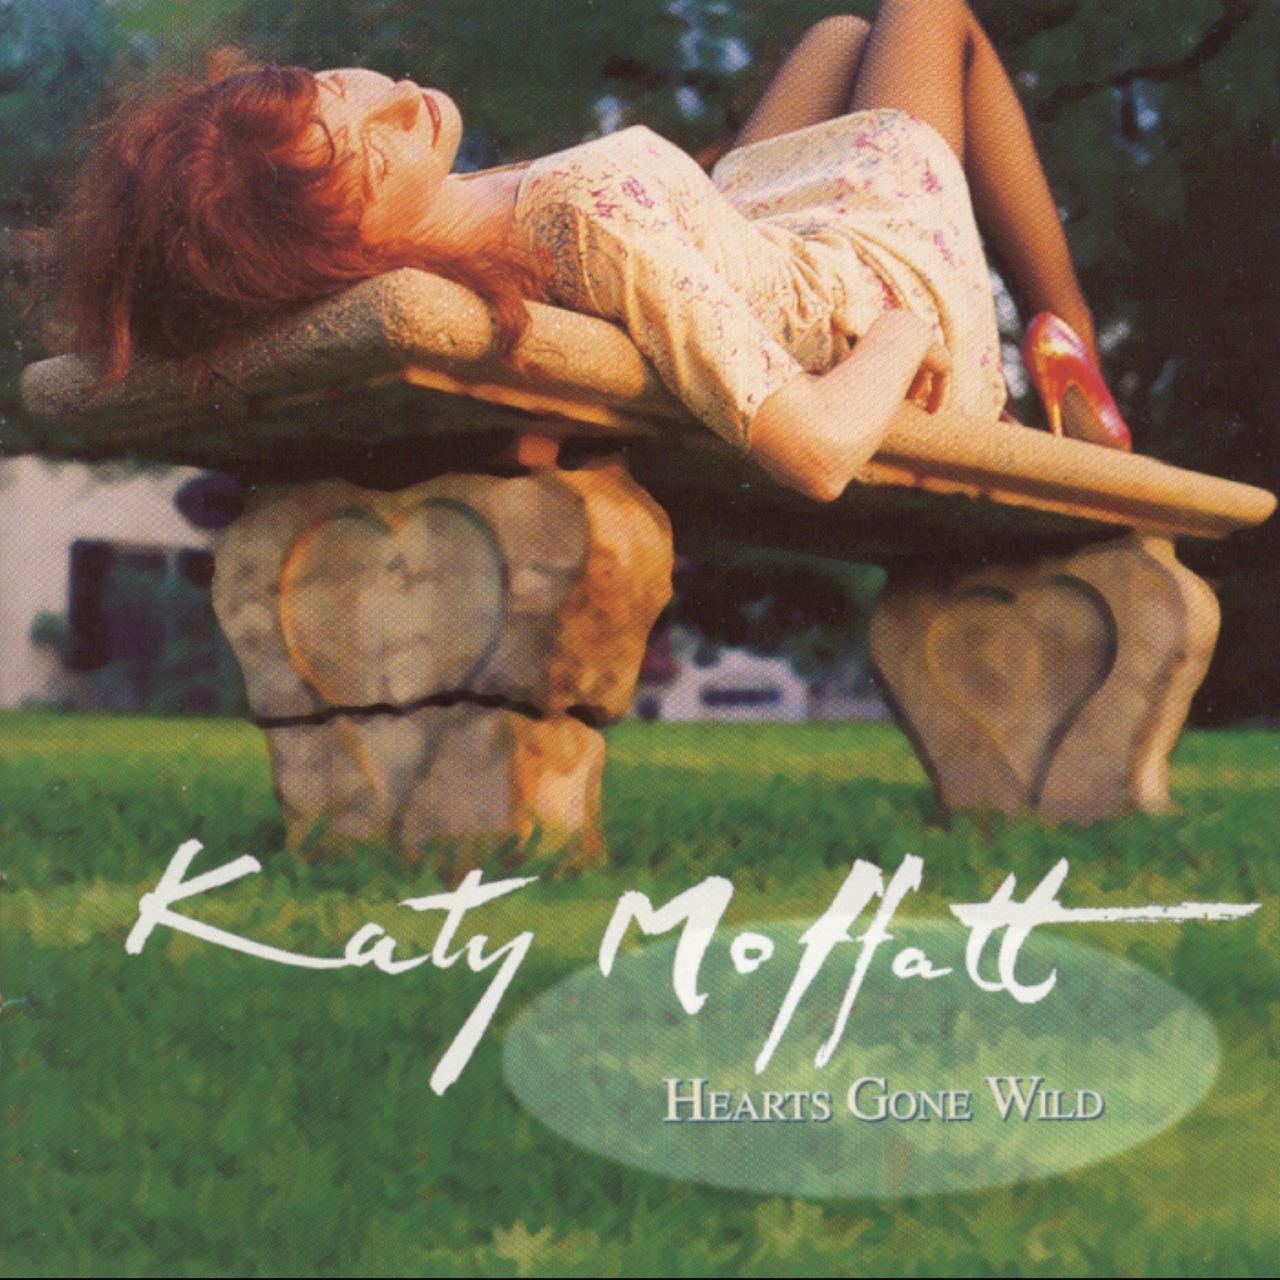 Katy Moffatt - Hearts Gone Wild cover album